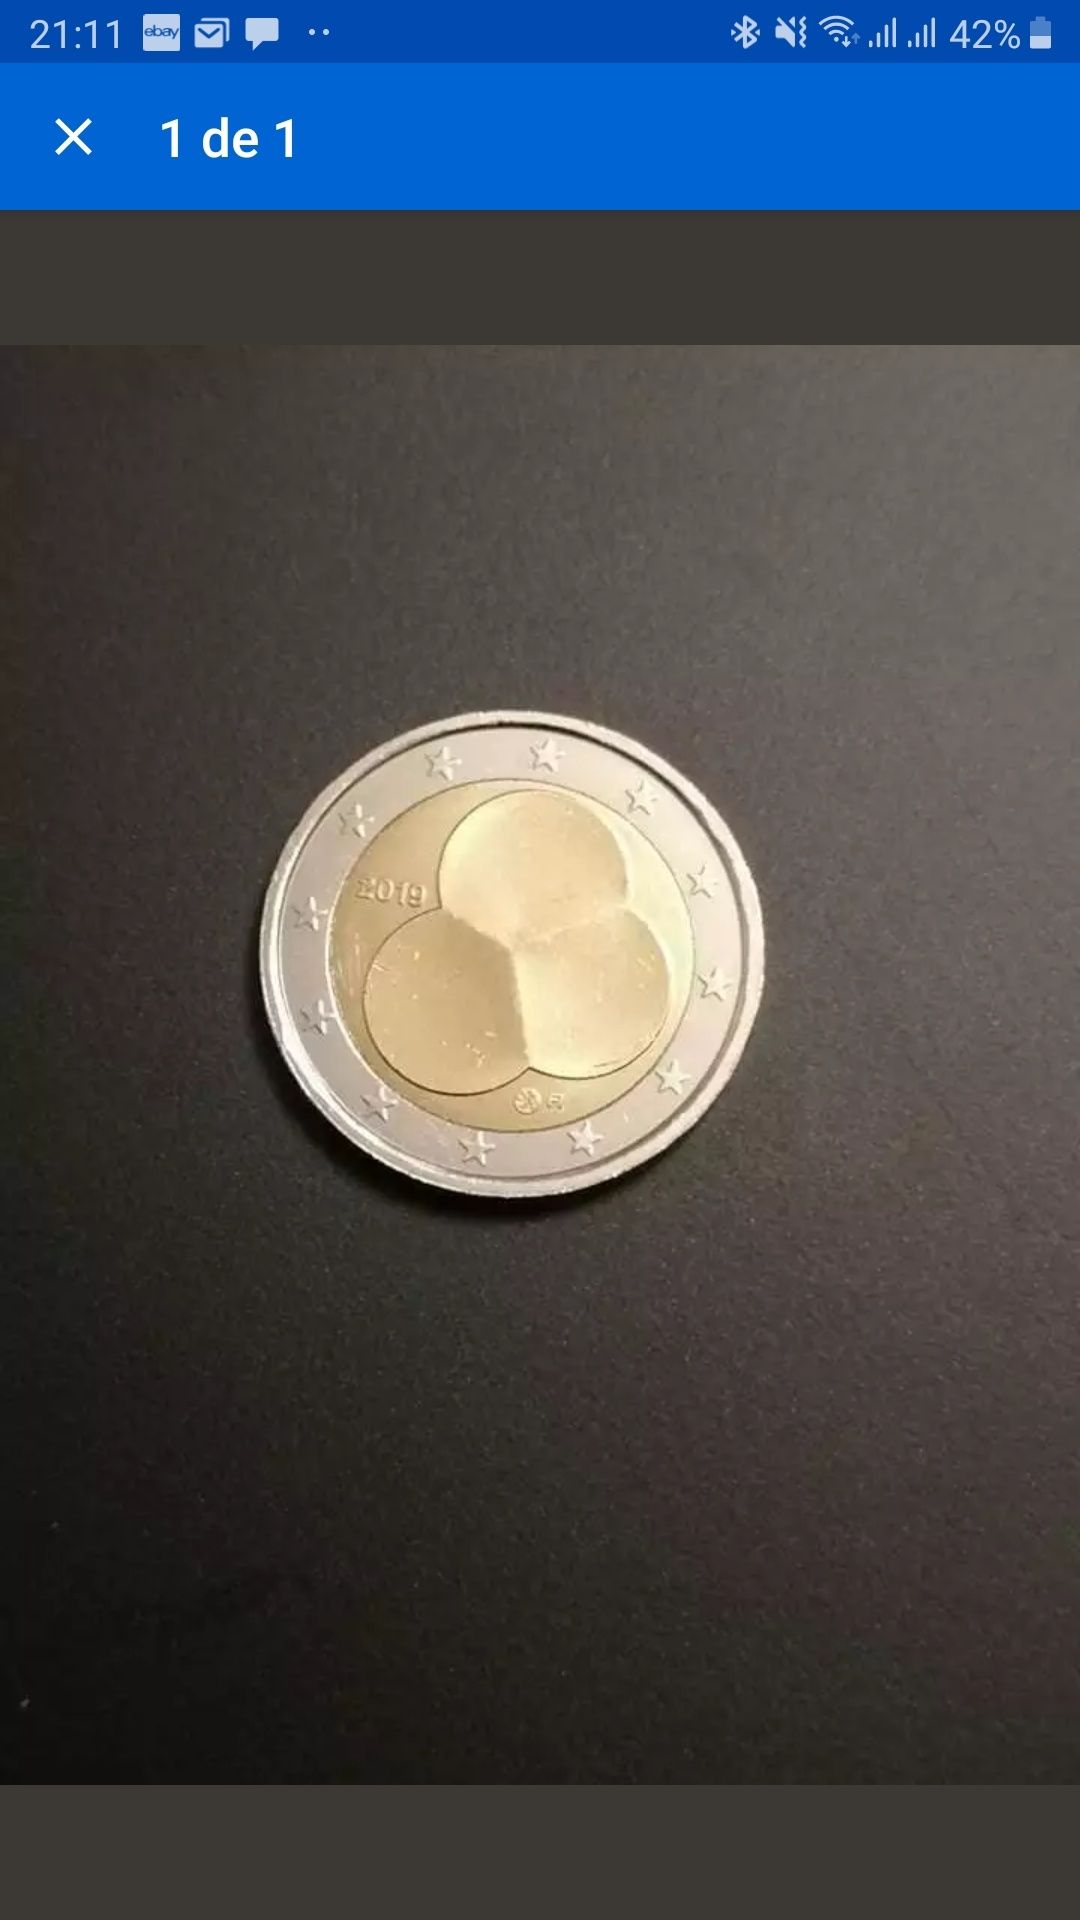 2 Euros Finlândia 2019